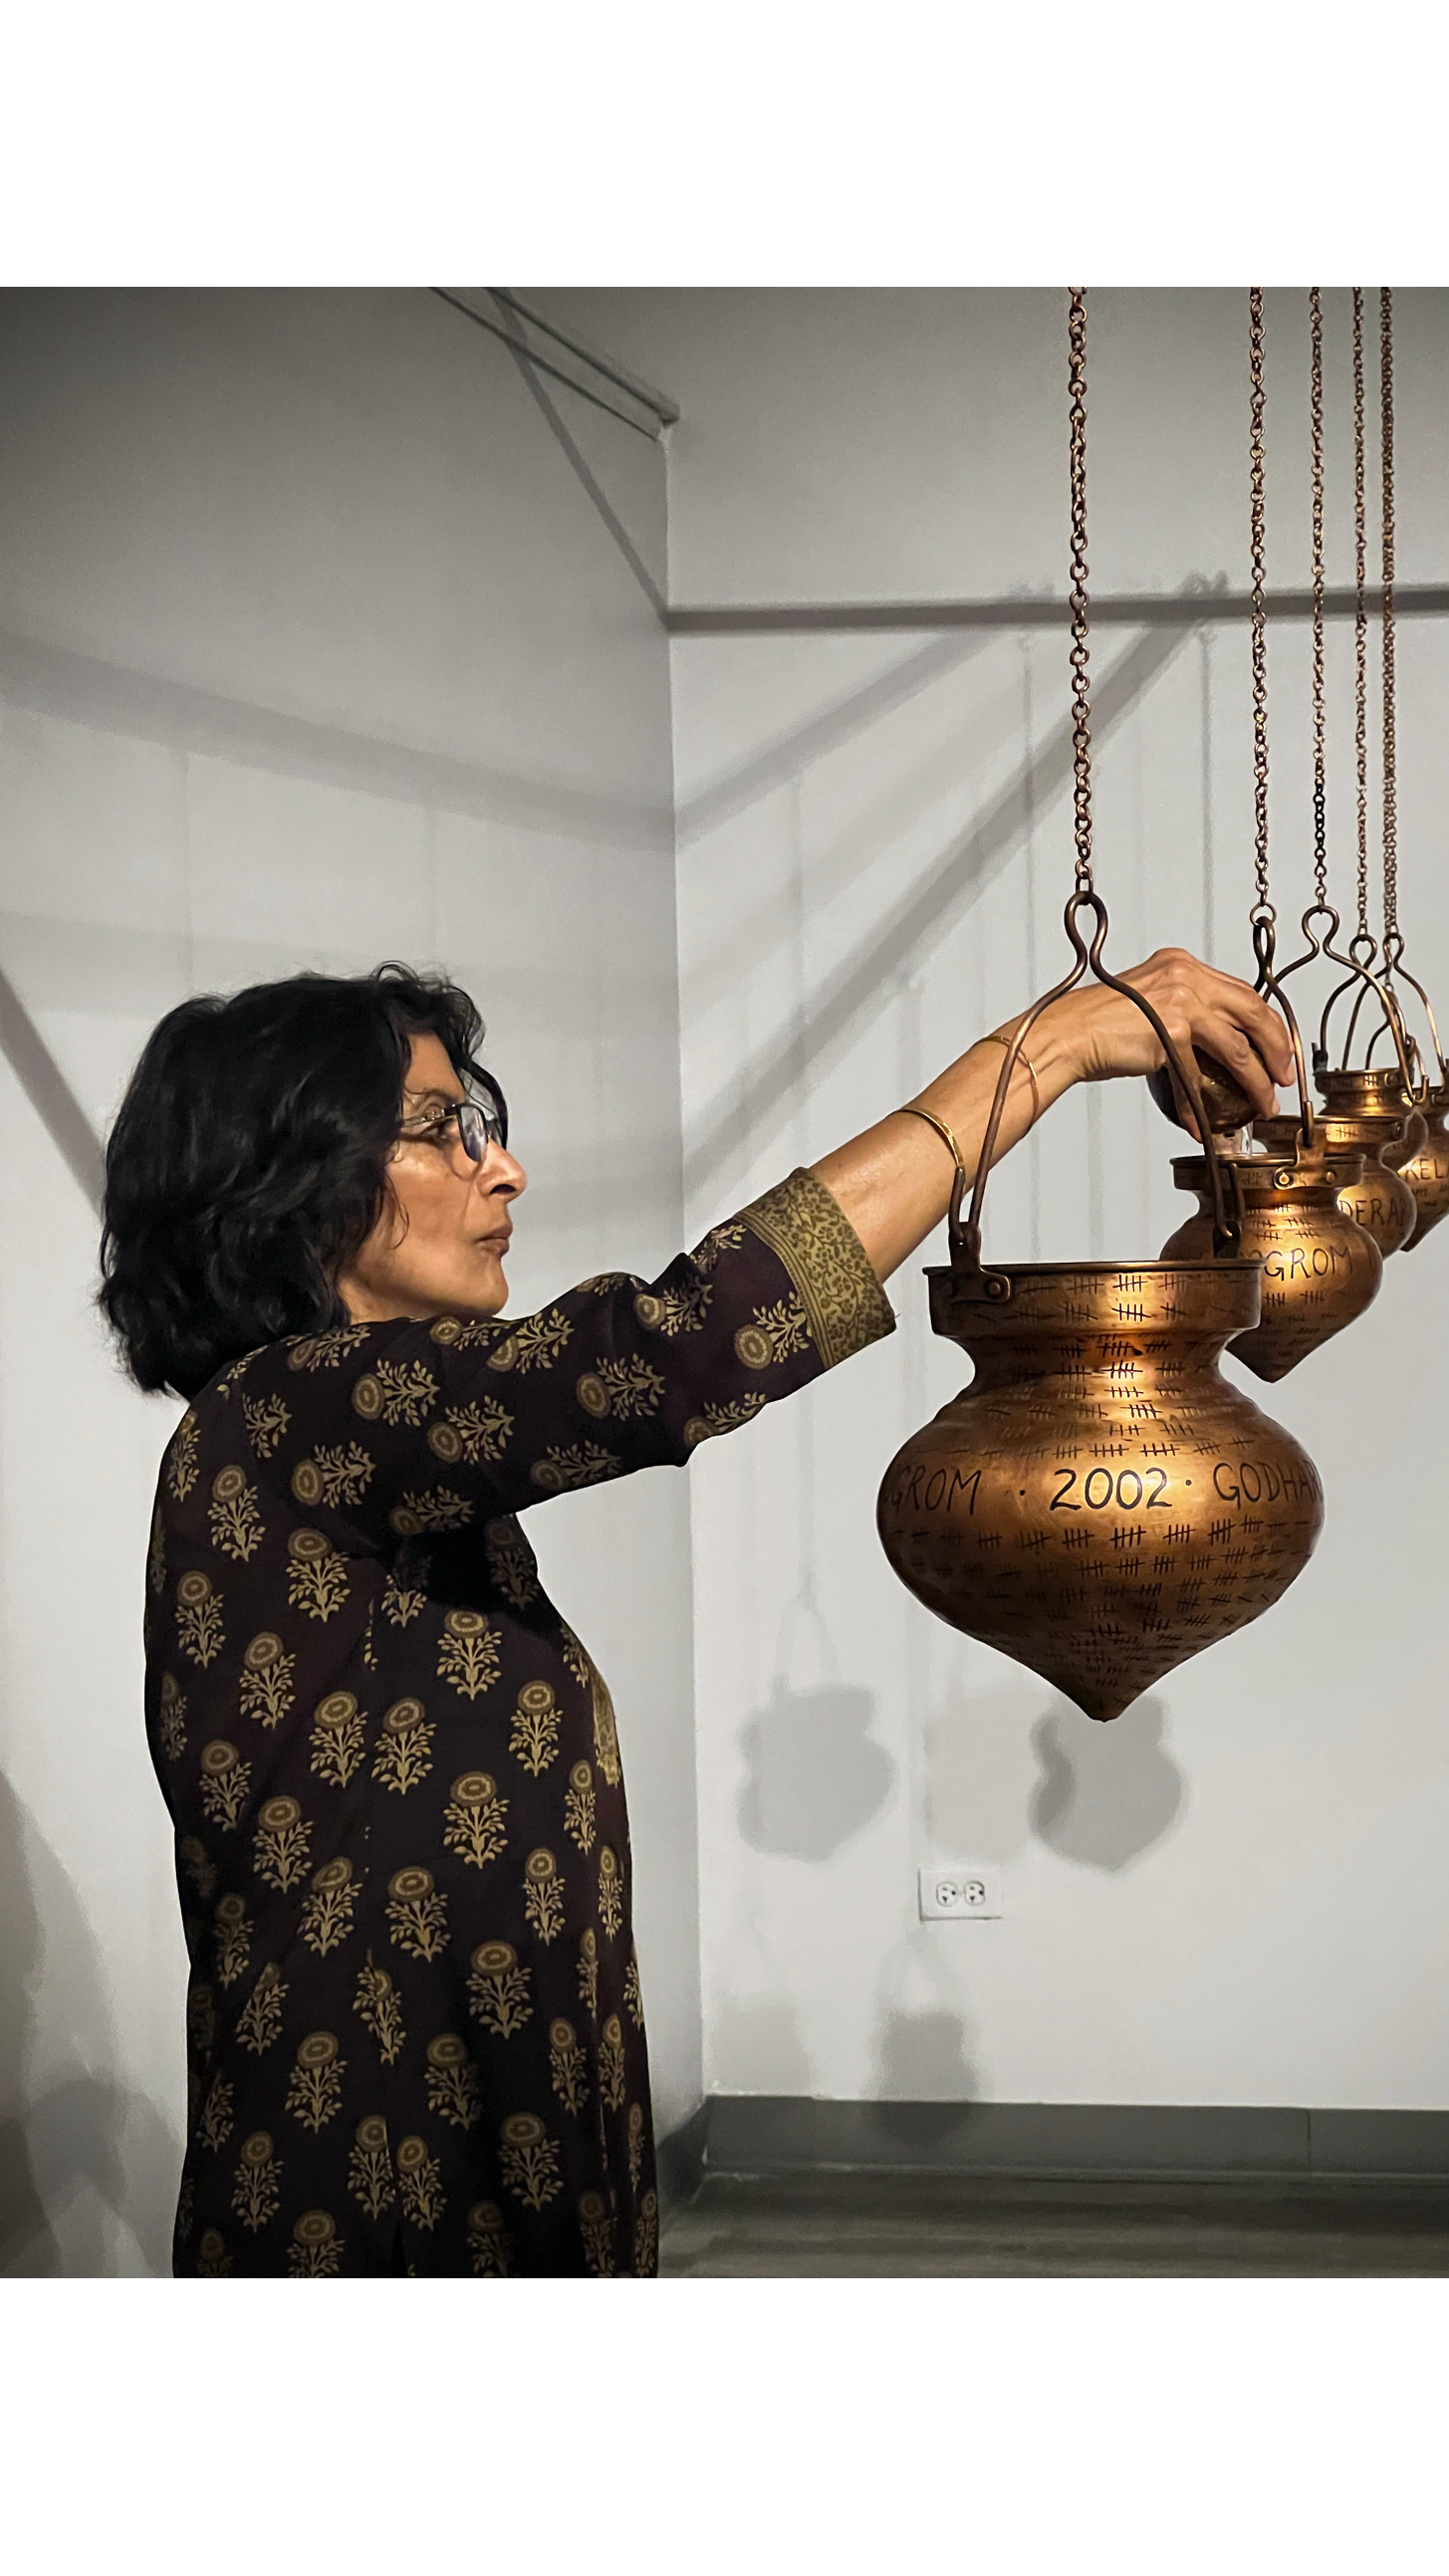 Interactive Anti-Memorial Art in Chicago | Urdu, Memory and Reflection Display